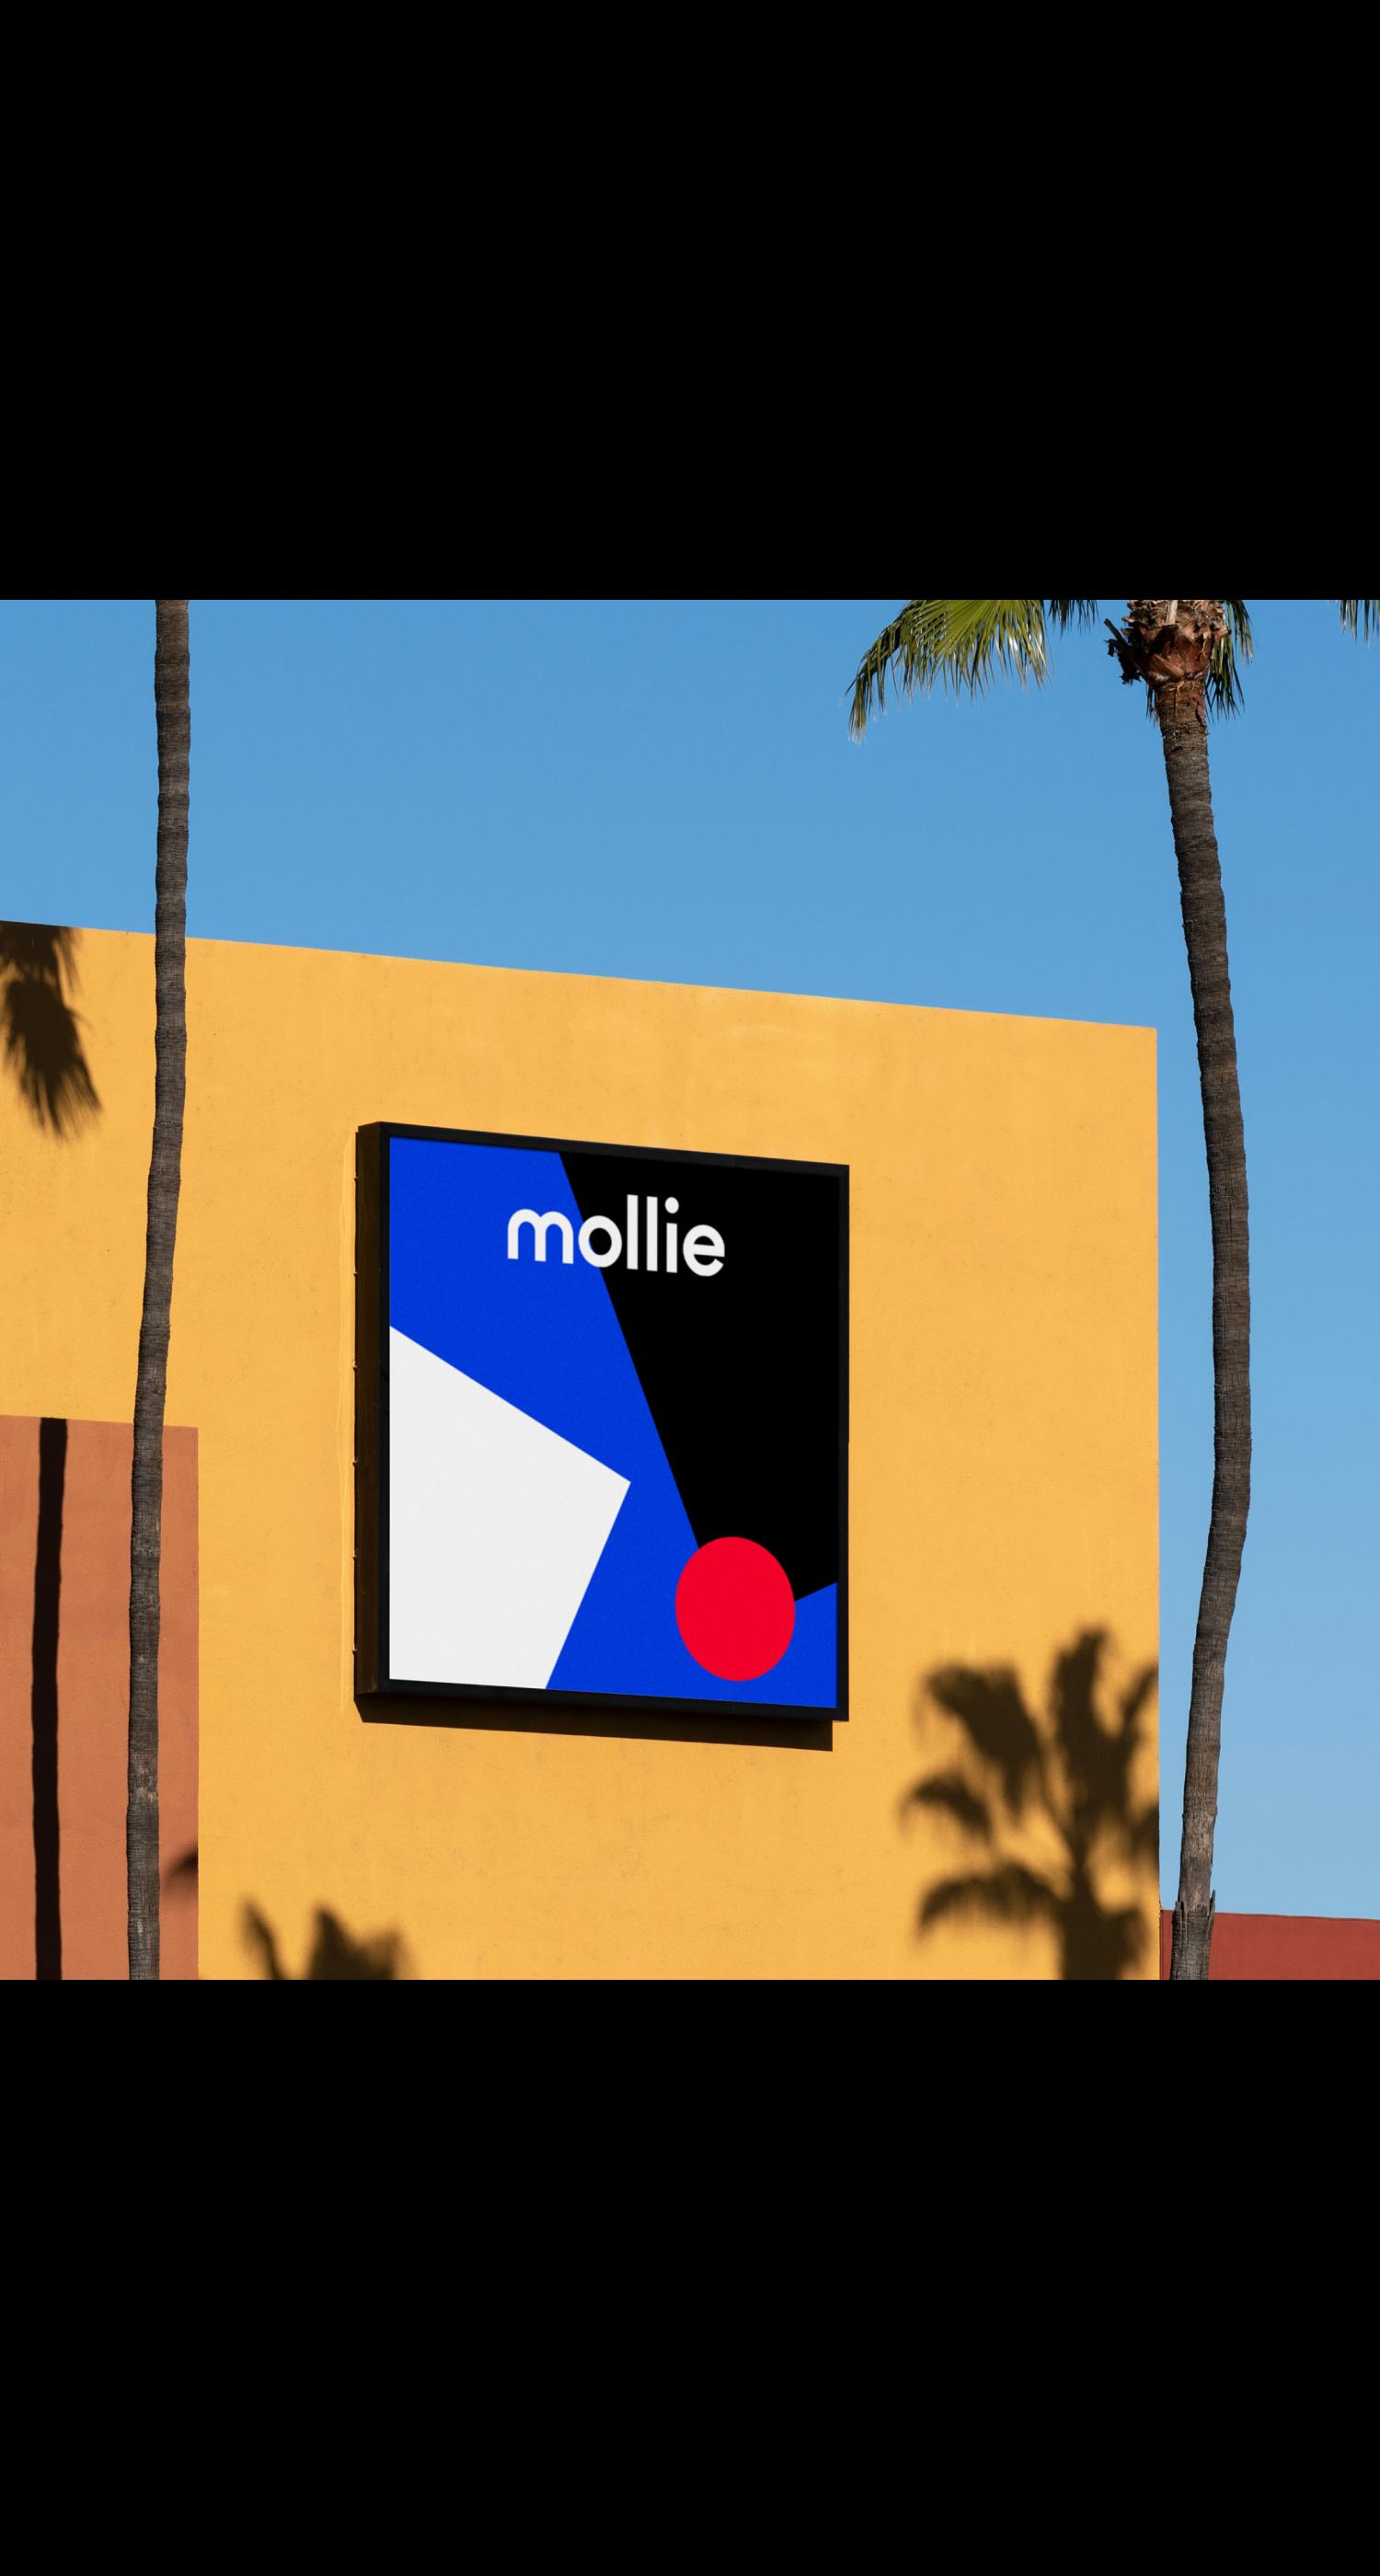 mollie_mobile_billboard